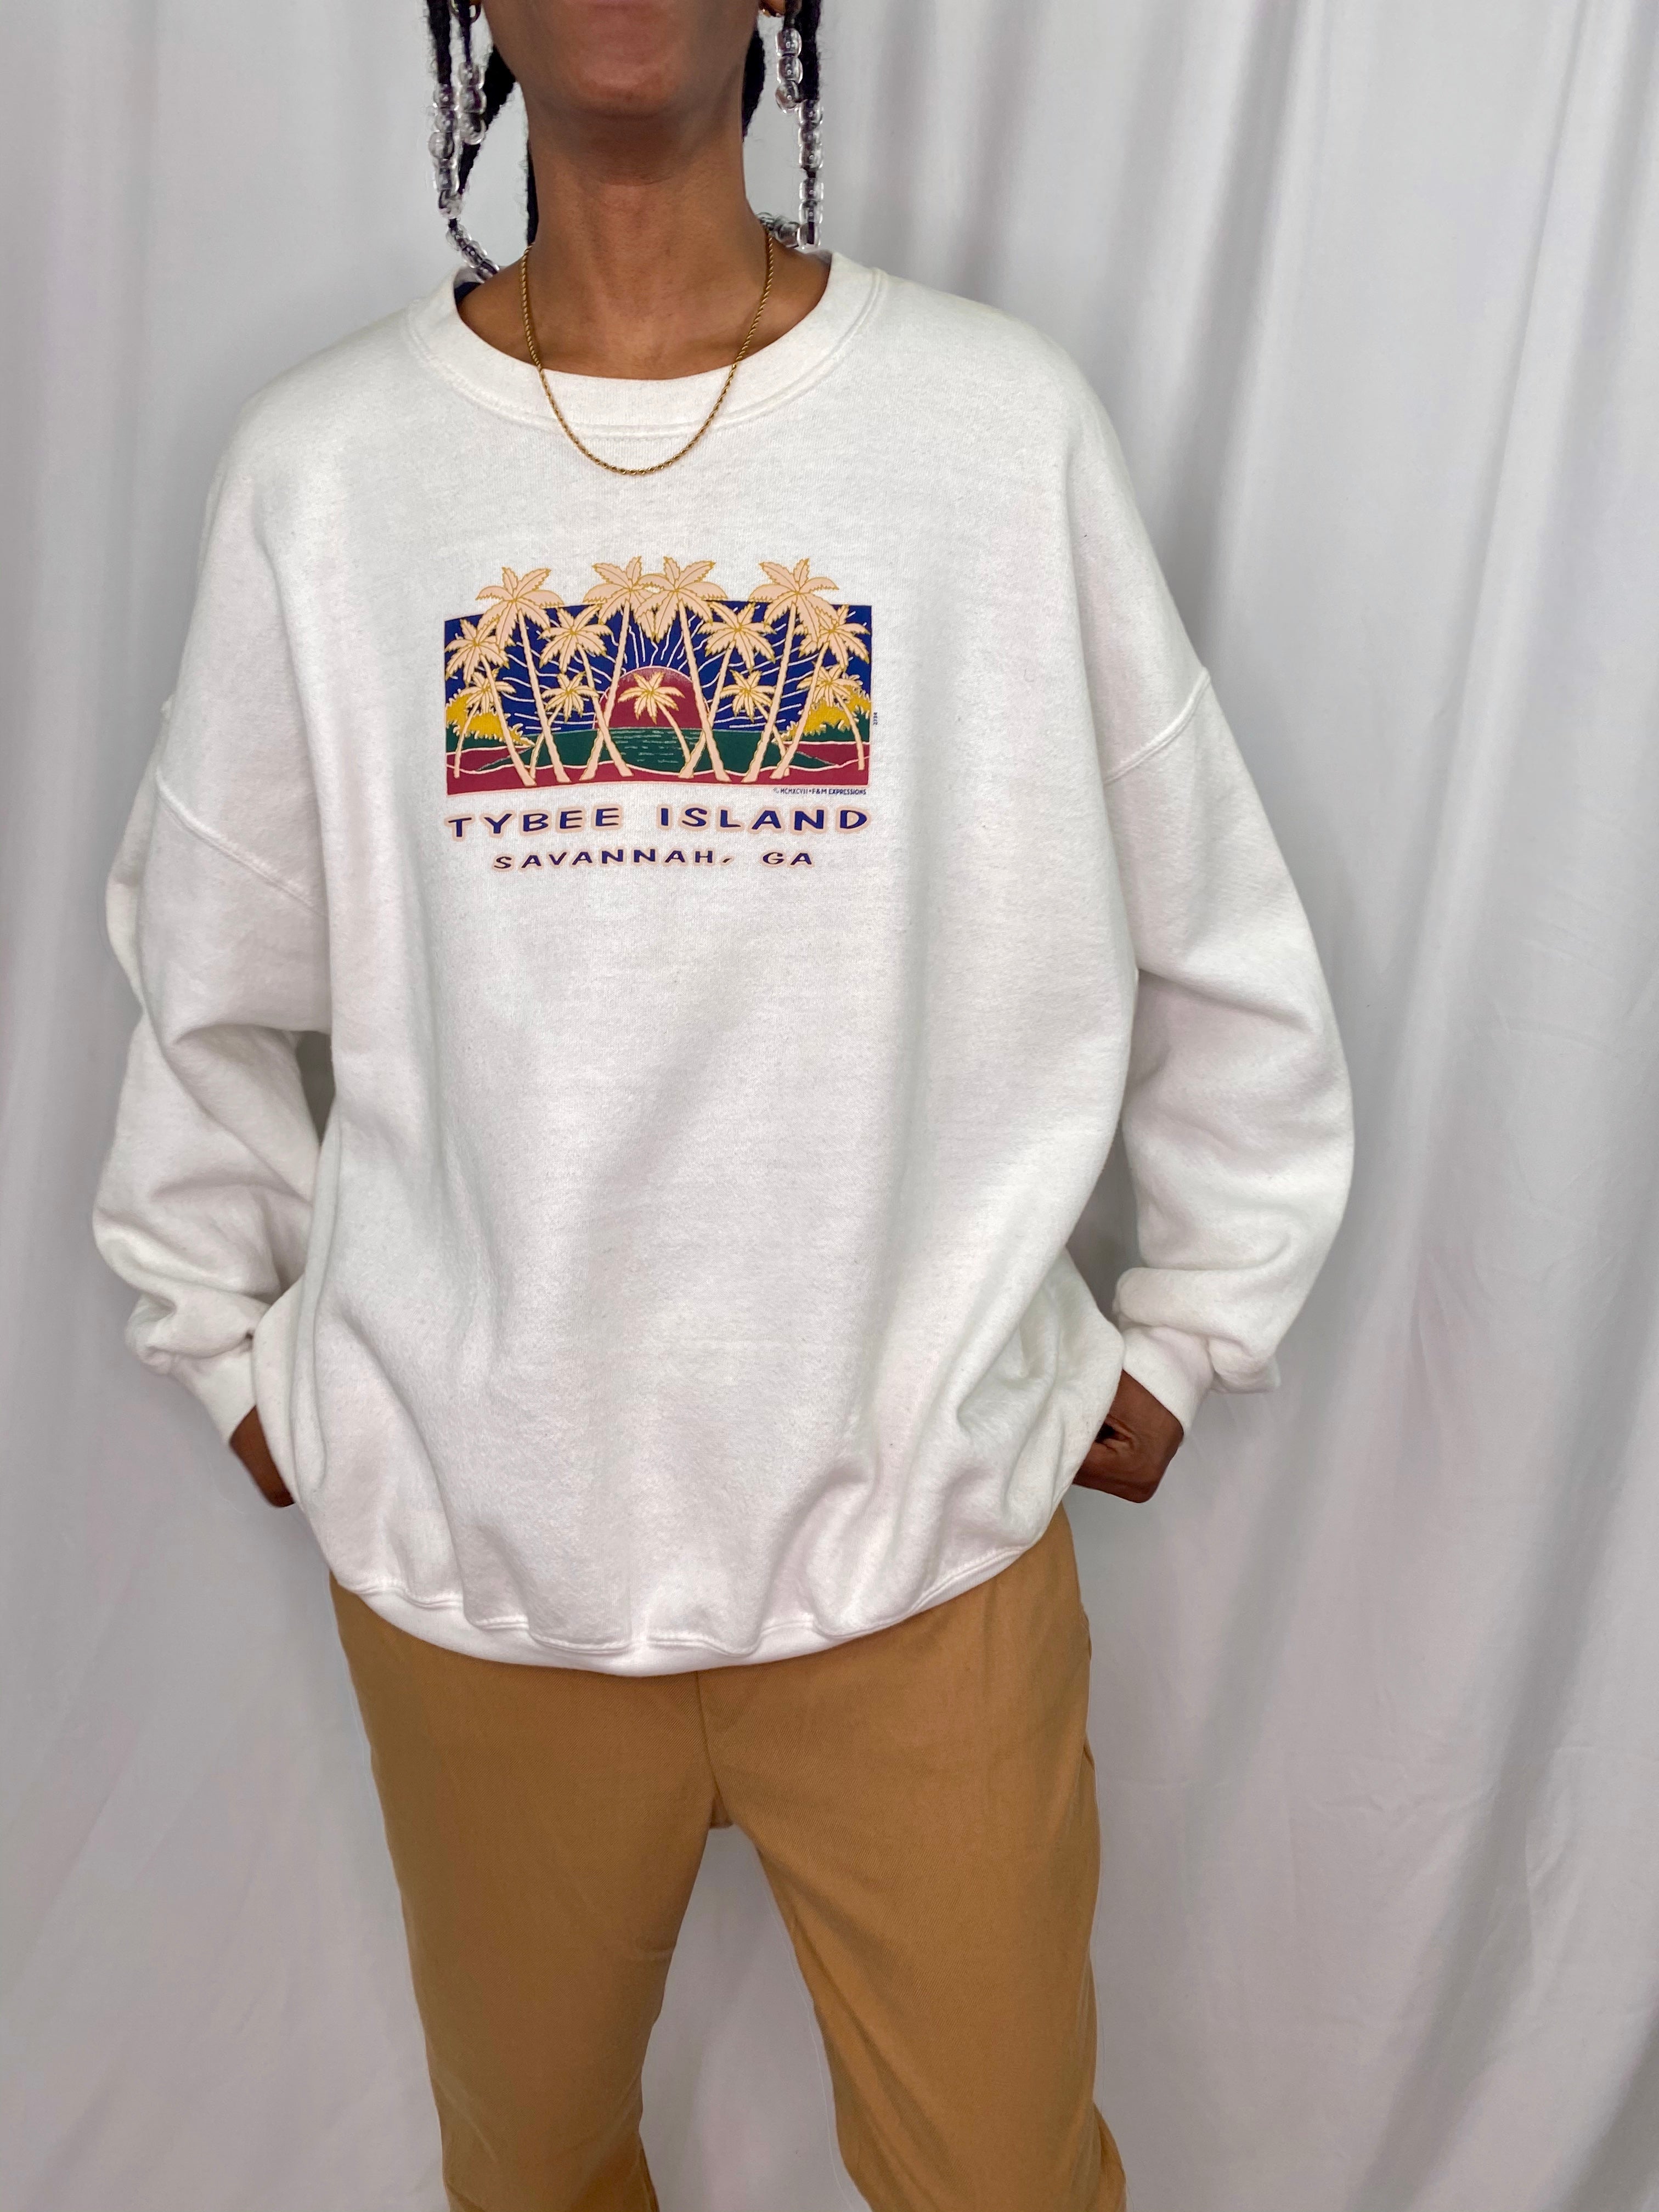 Lee Authentic Apparel White Crewneck Sweater